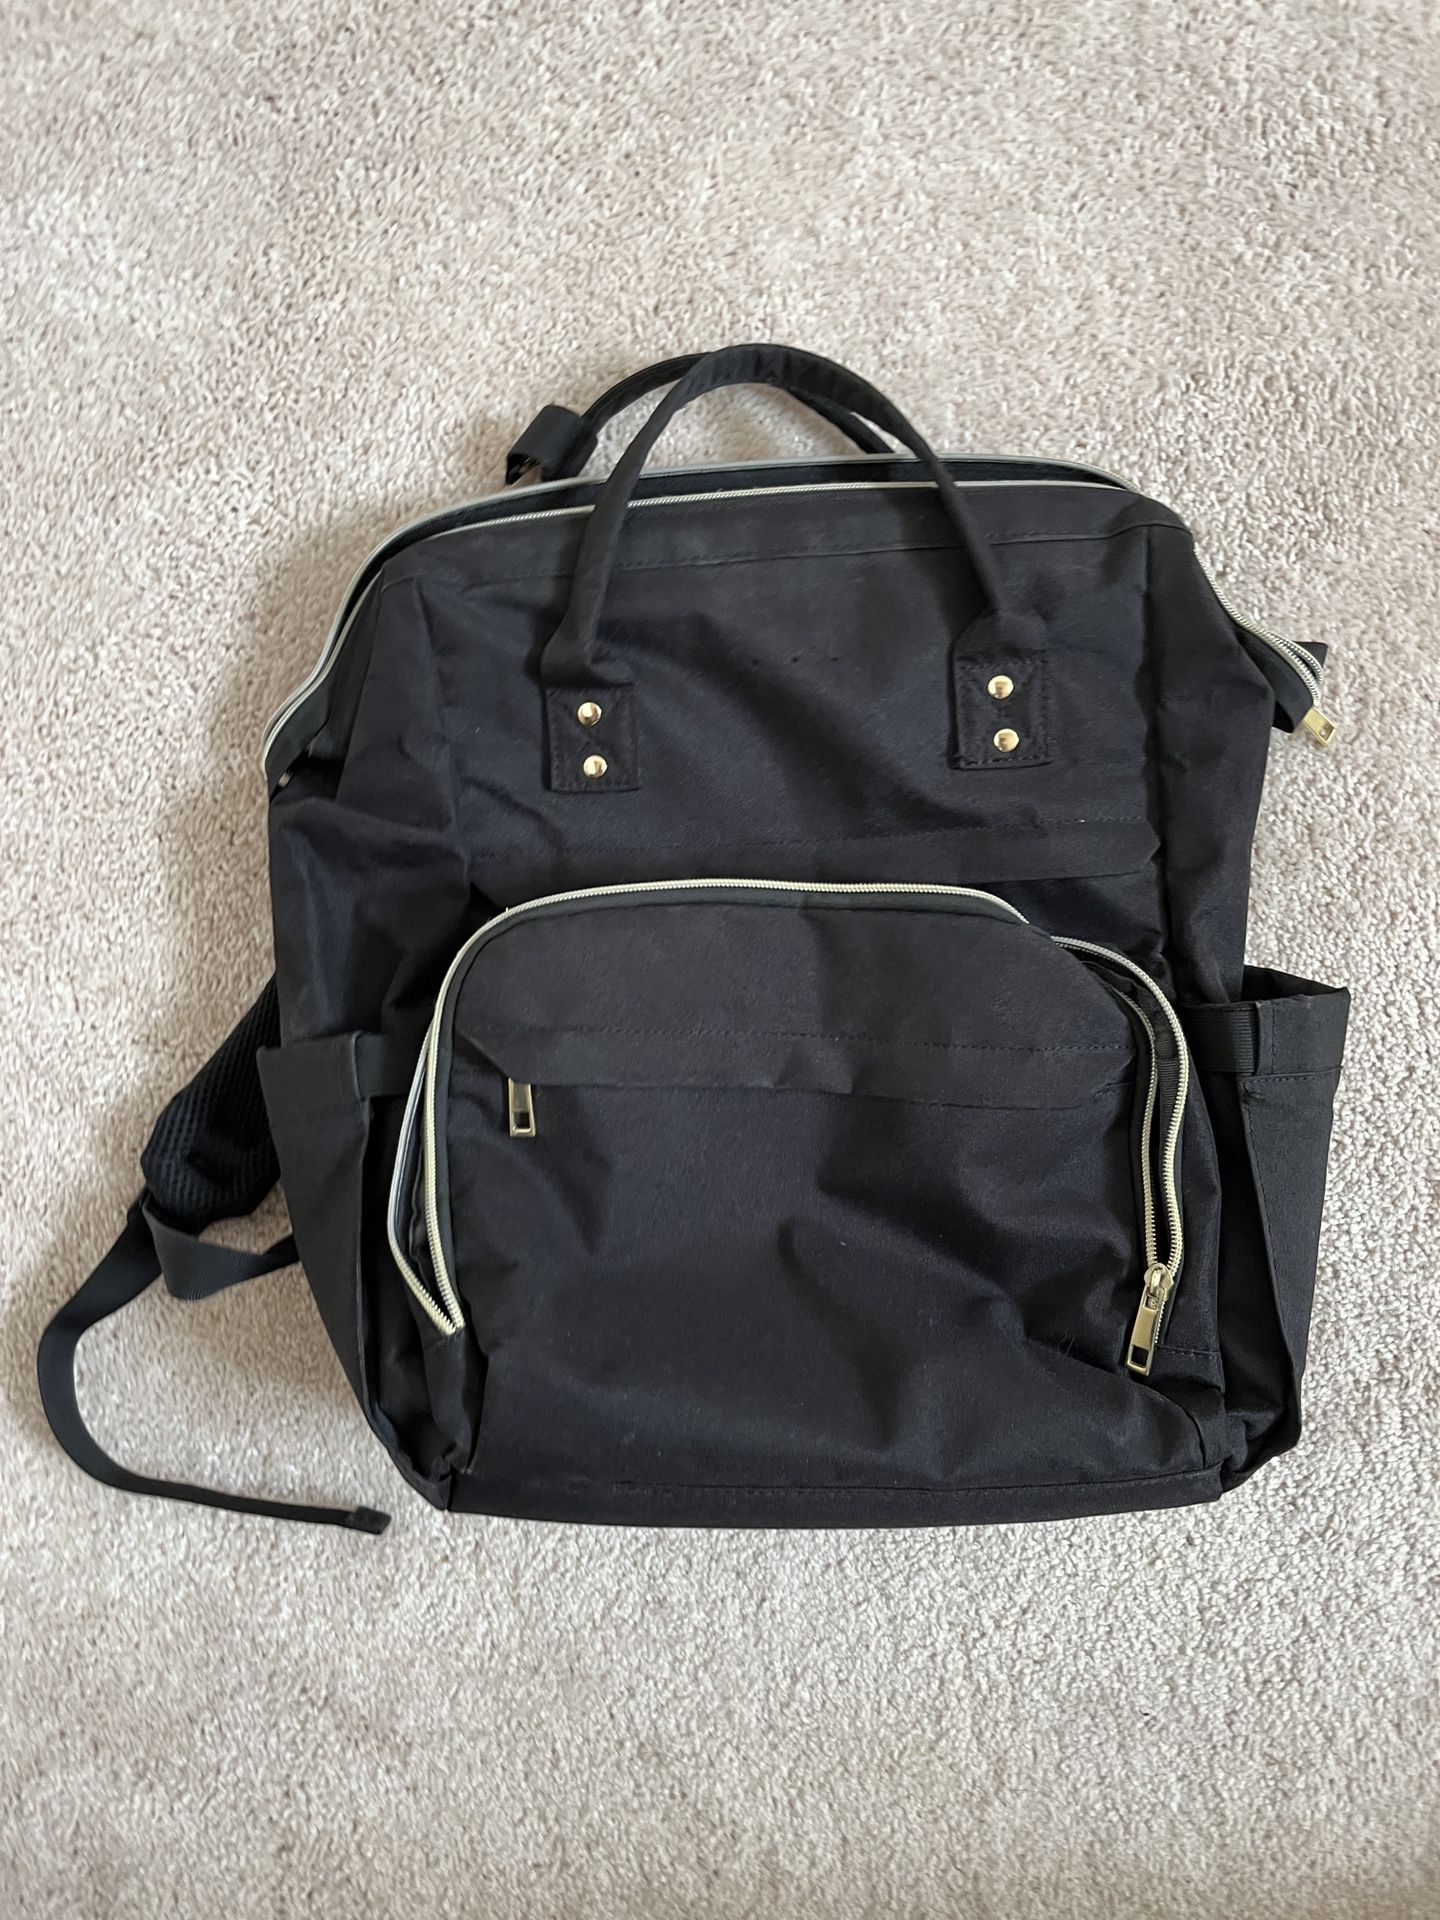 Waterproof Work Backpack With Laptop Case